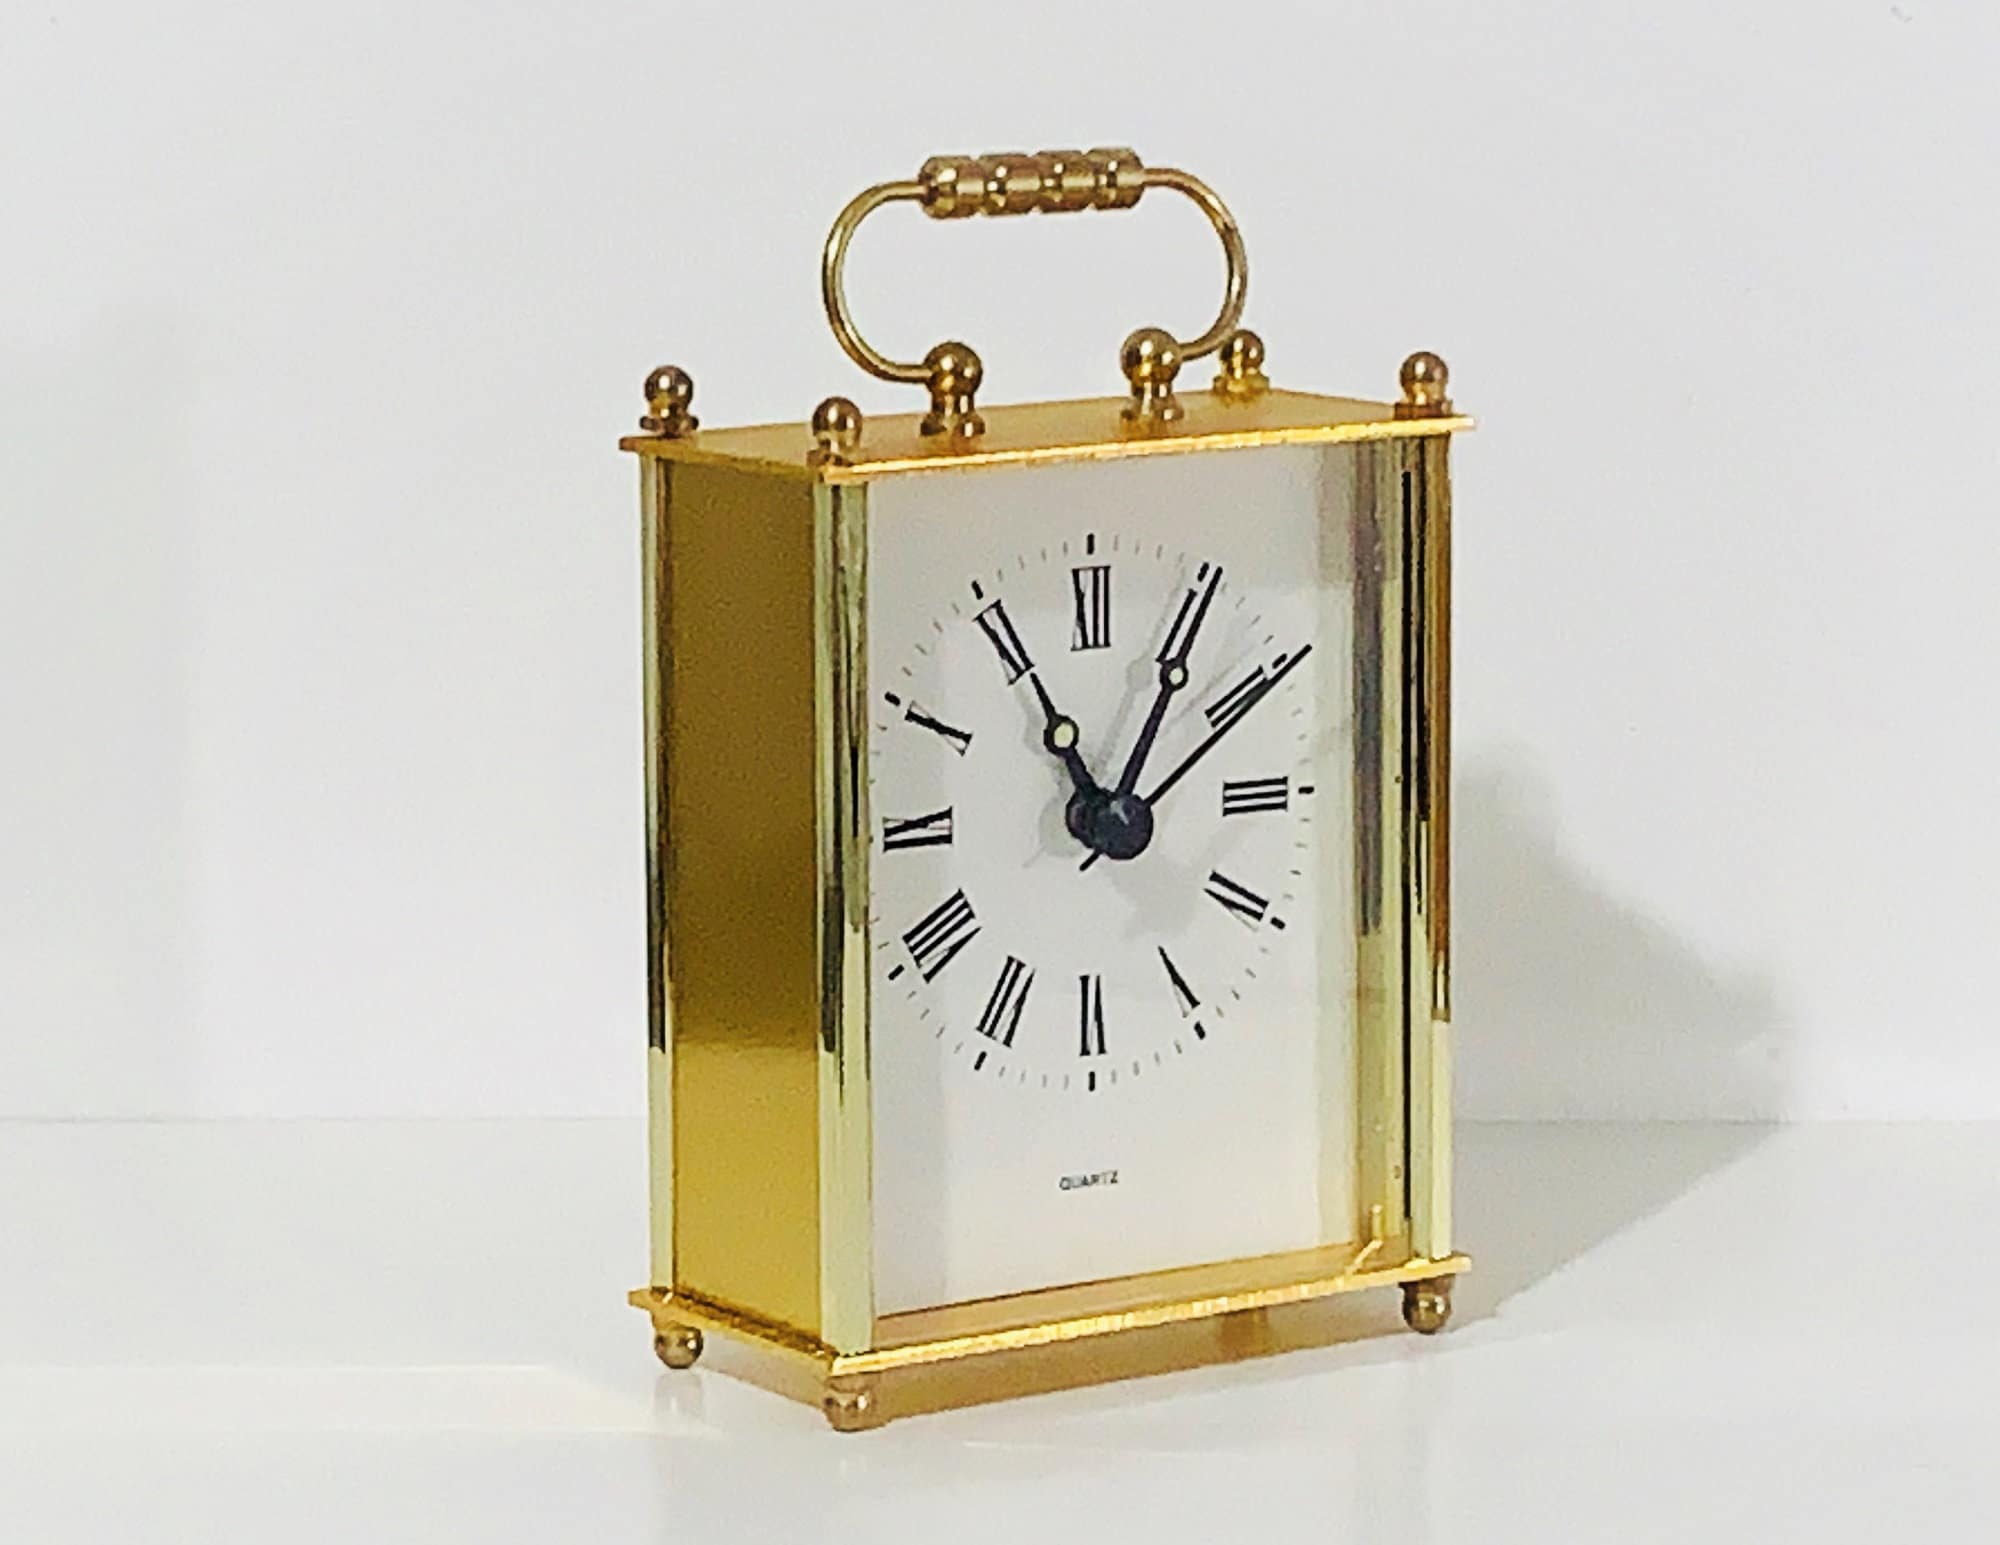 Beautiful Mini Carriage Clock, Quartz Movement, Luminous Hands, Brass and  Brass Finish Case,  H - 3 W  D. Mint Condition.